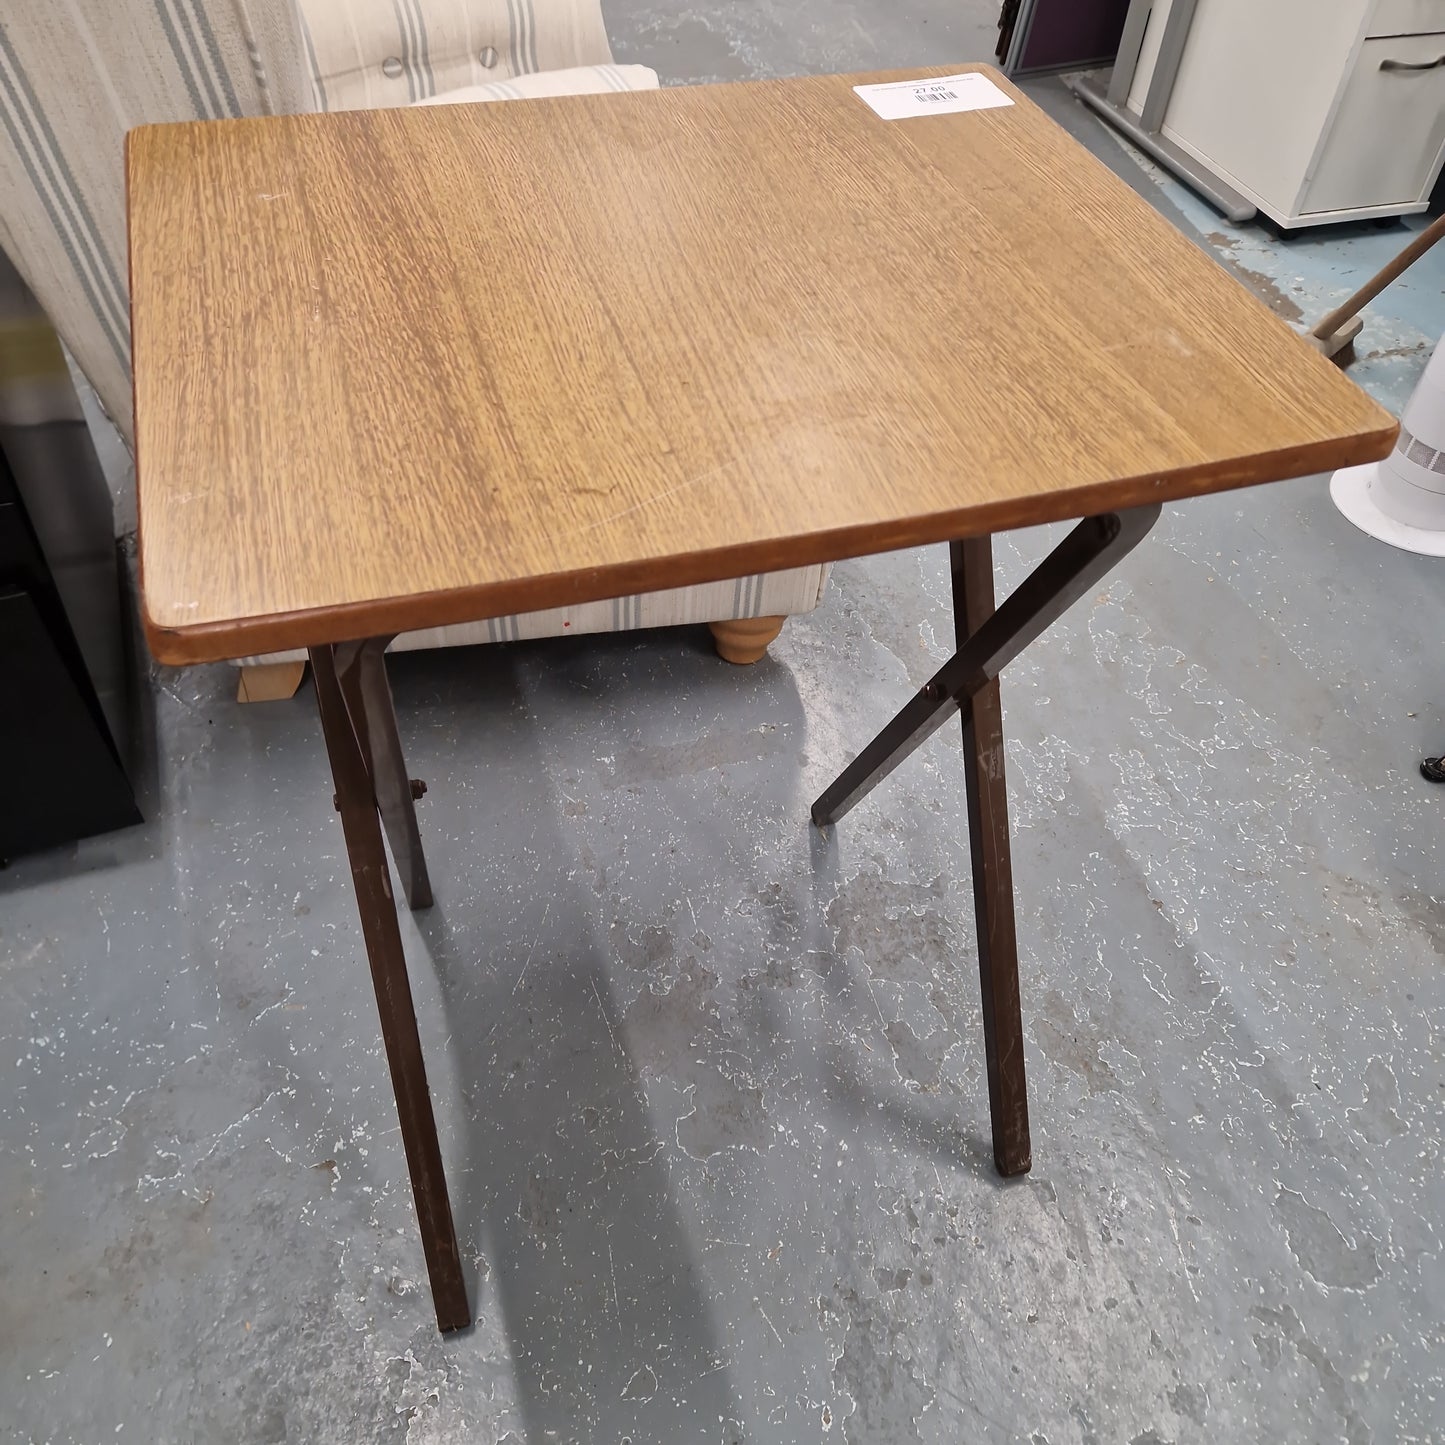 Oak laminate small folding table 600W x 480D metal legs